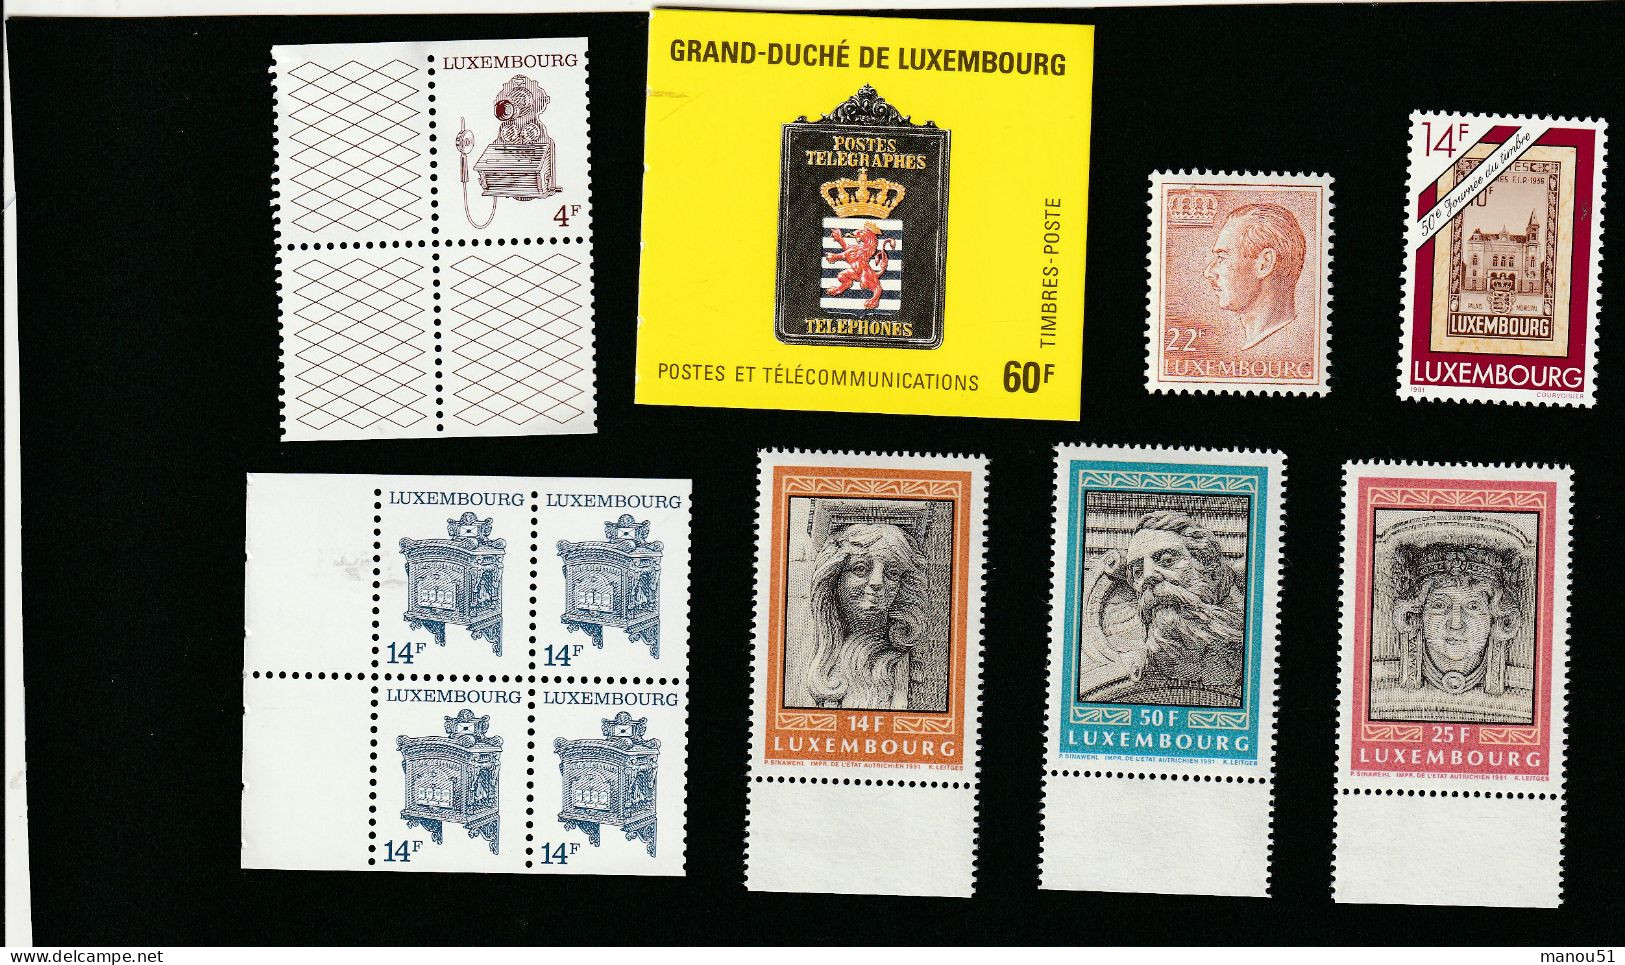 LUXEMBOURG - Emission Du 23.09.1991 - Lot 7 Timbres + 4 Enveloppes 1er Jour - Ungebraucht